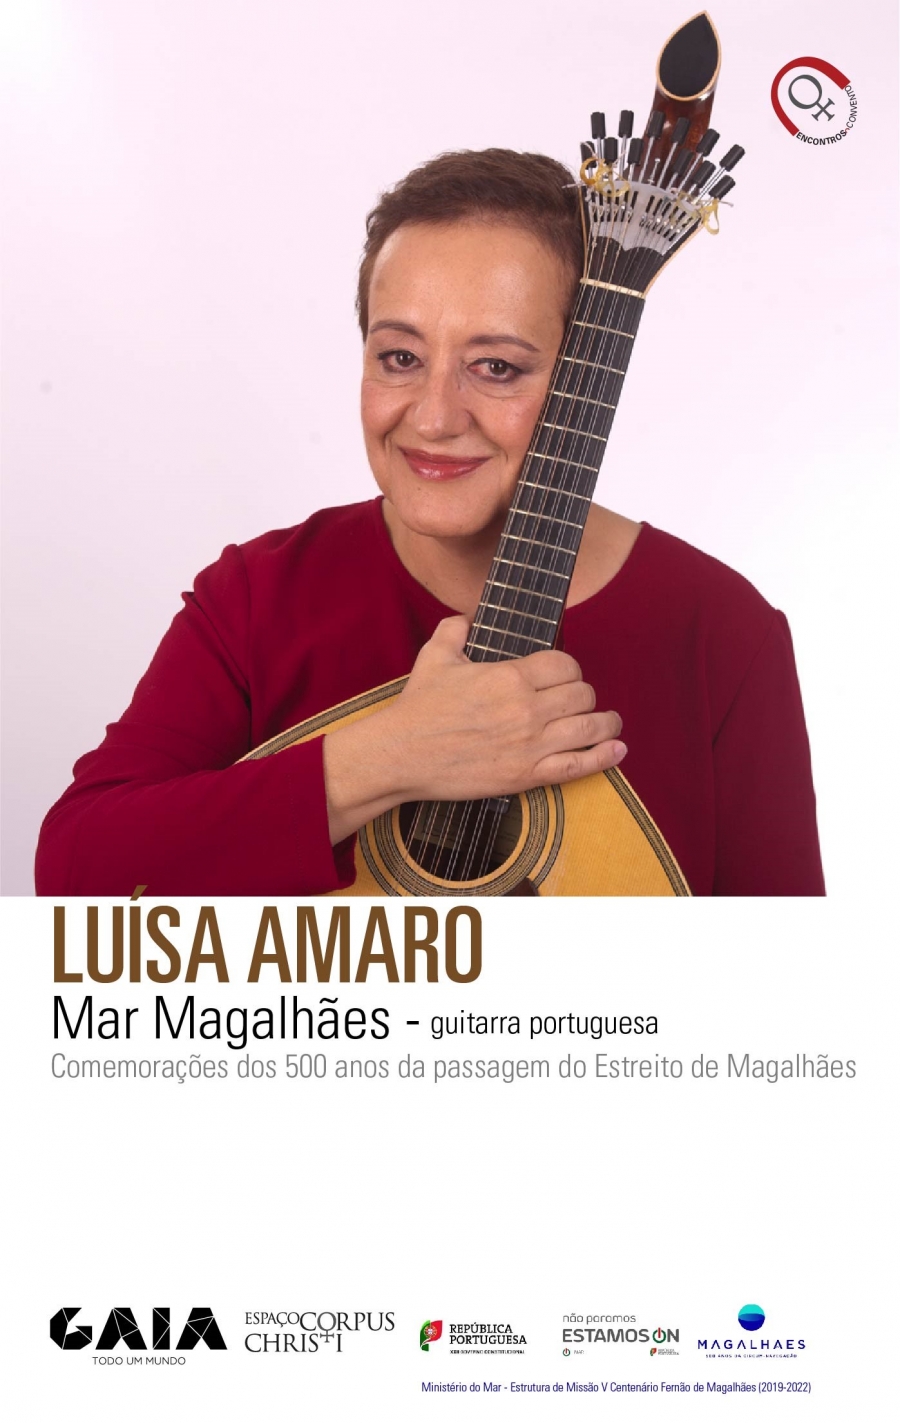 Luisa Amaro